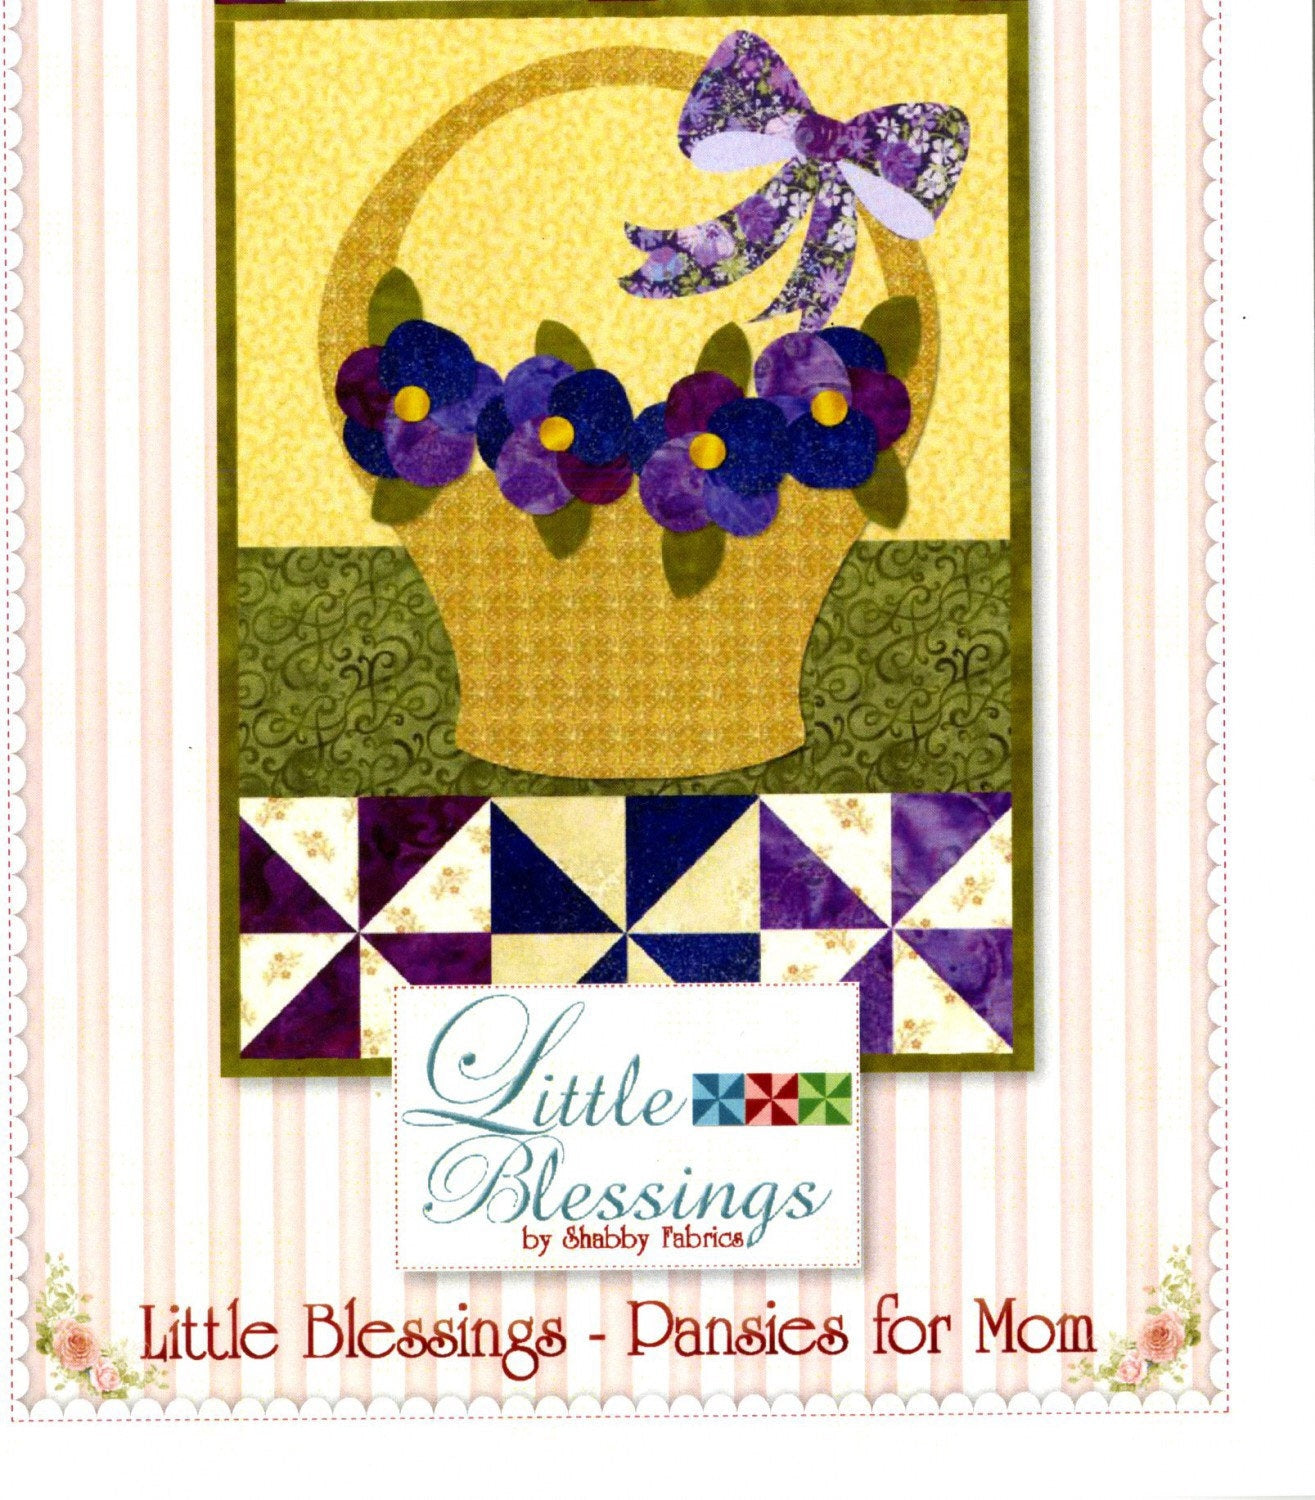 Little Blessings Pansies for Mom Pattern - Shabby Fabrics - Jennifer Bosworth - Mini Quilt Pattern - Wall Hanging Pattern